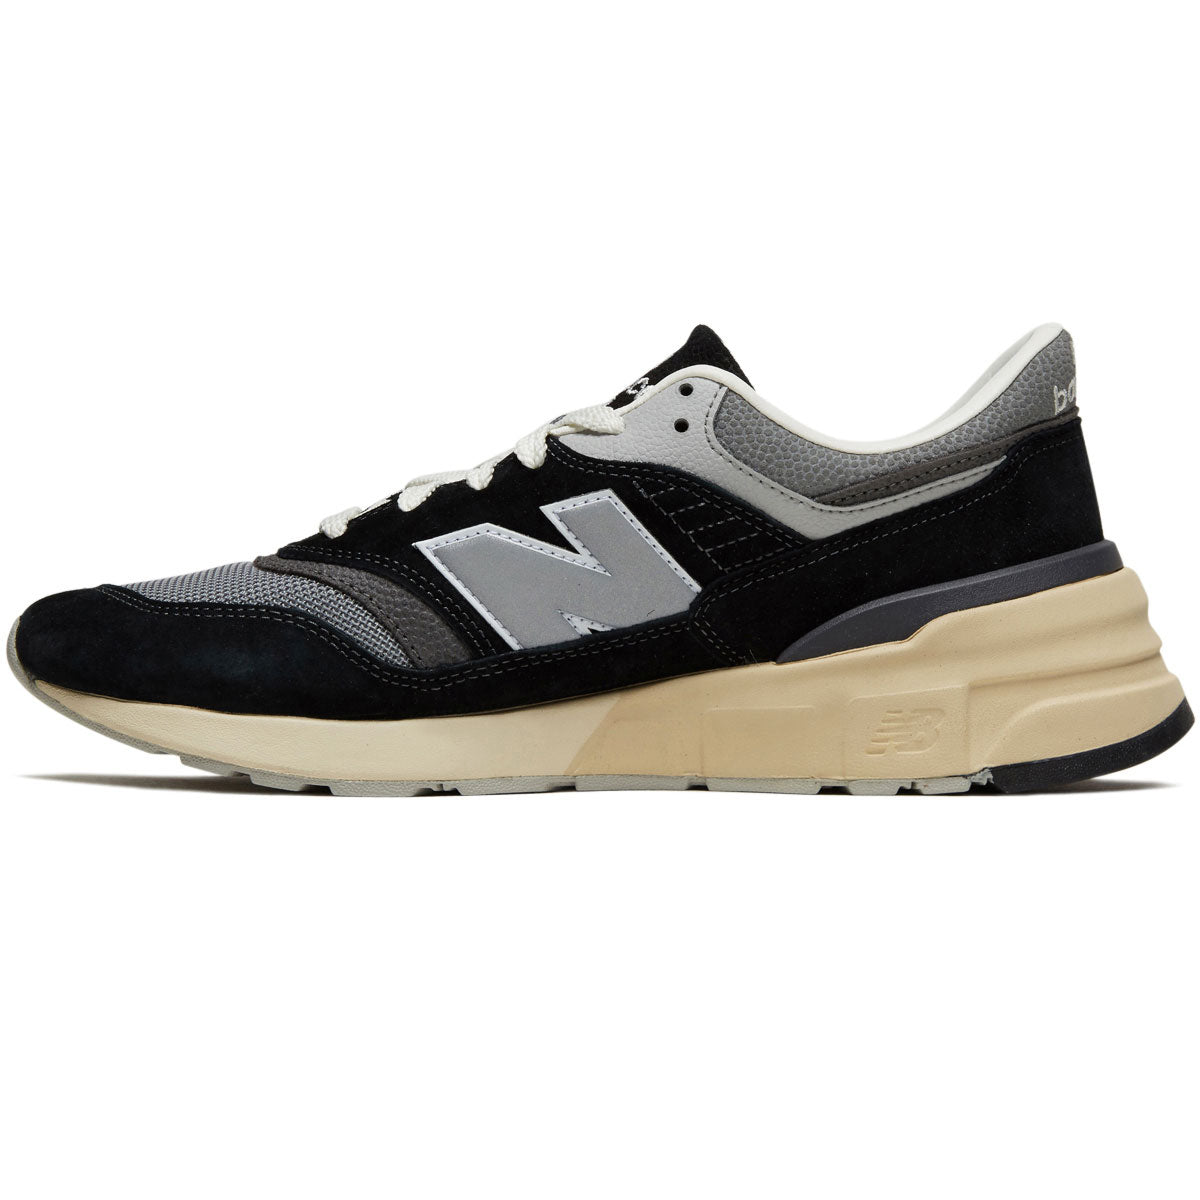 New Balance 997R Shoes - Black/Shadow Grey image 2